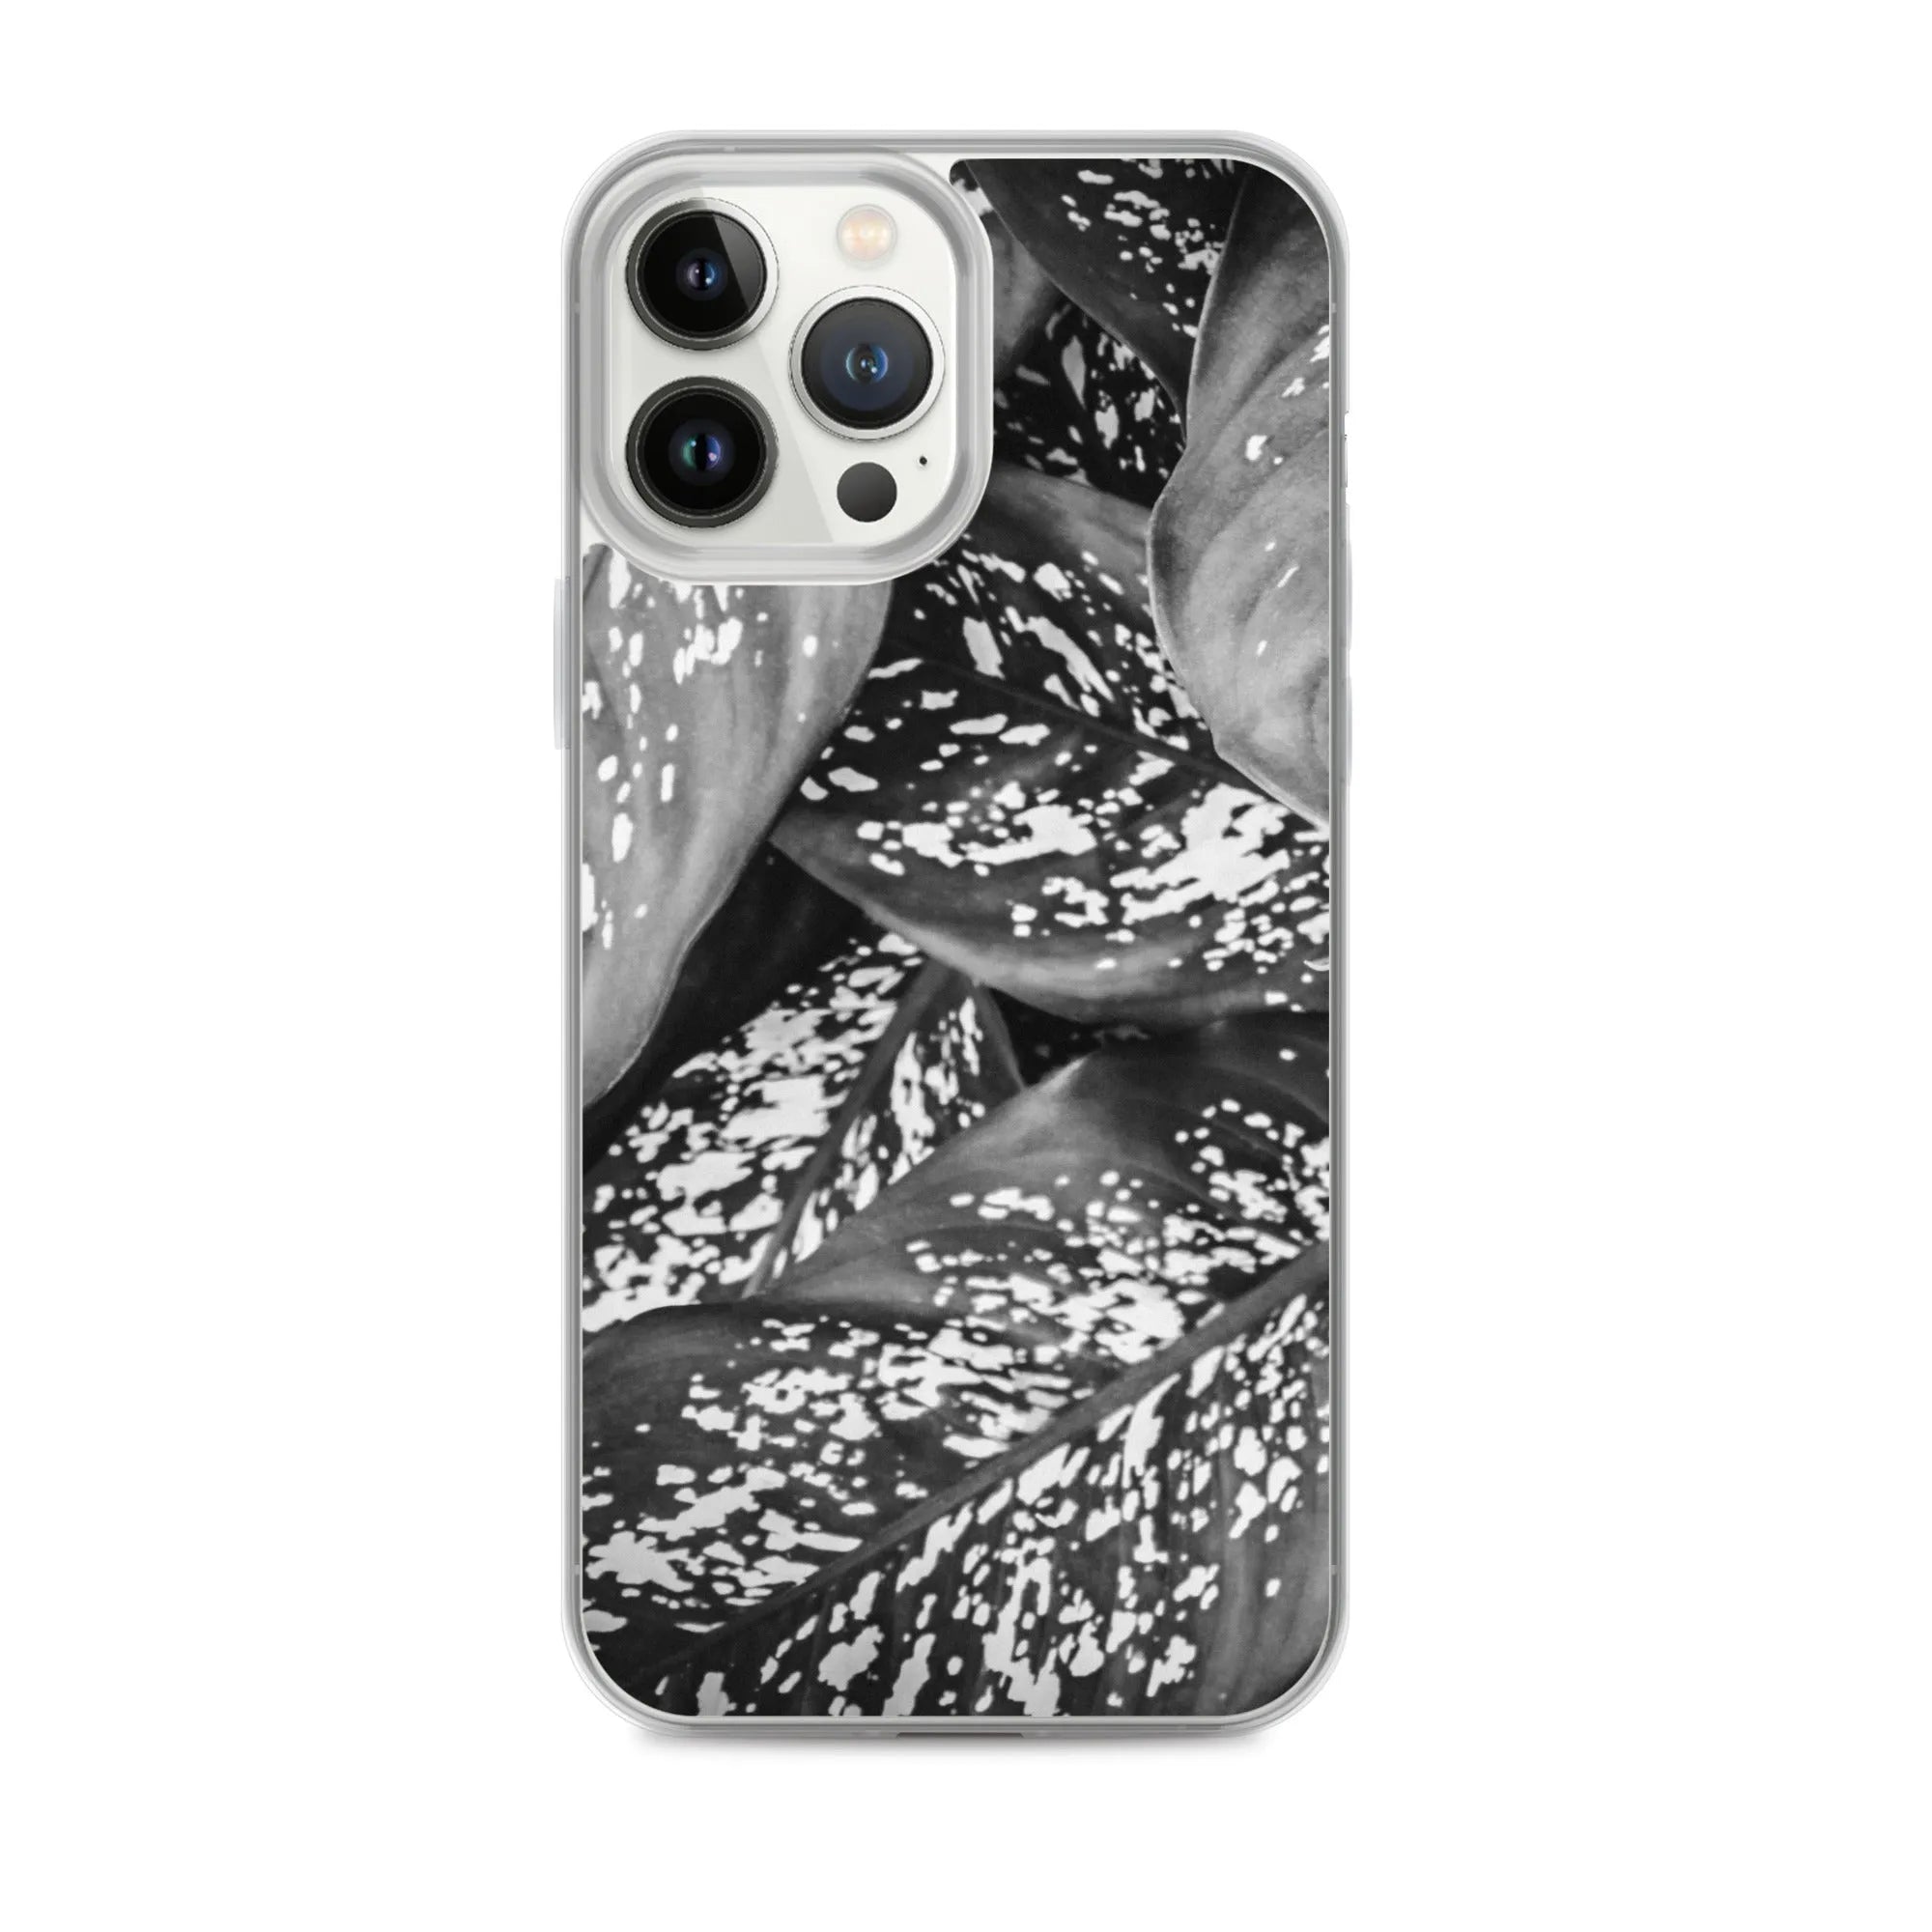 Pitter Splatter Botanical Art Iphone Case - Black And White - Iphone 13 Pro Max - Mobile Phone Cases - Aesthetic Art